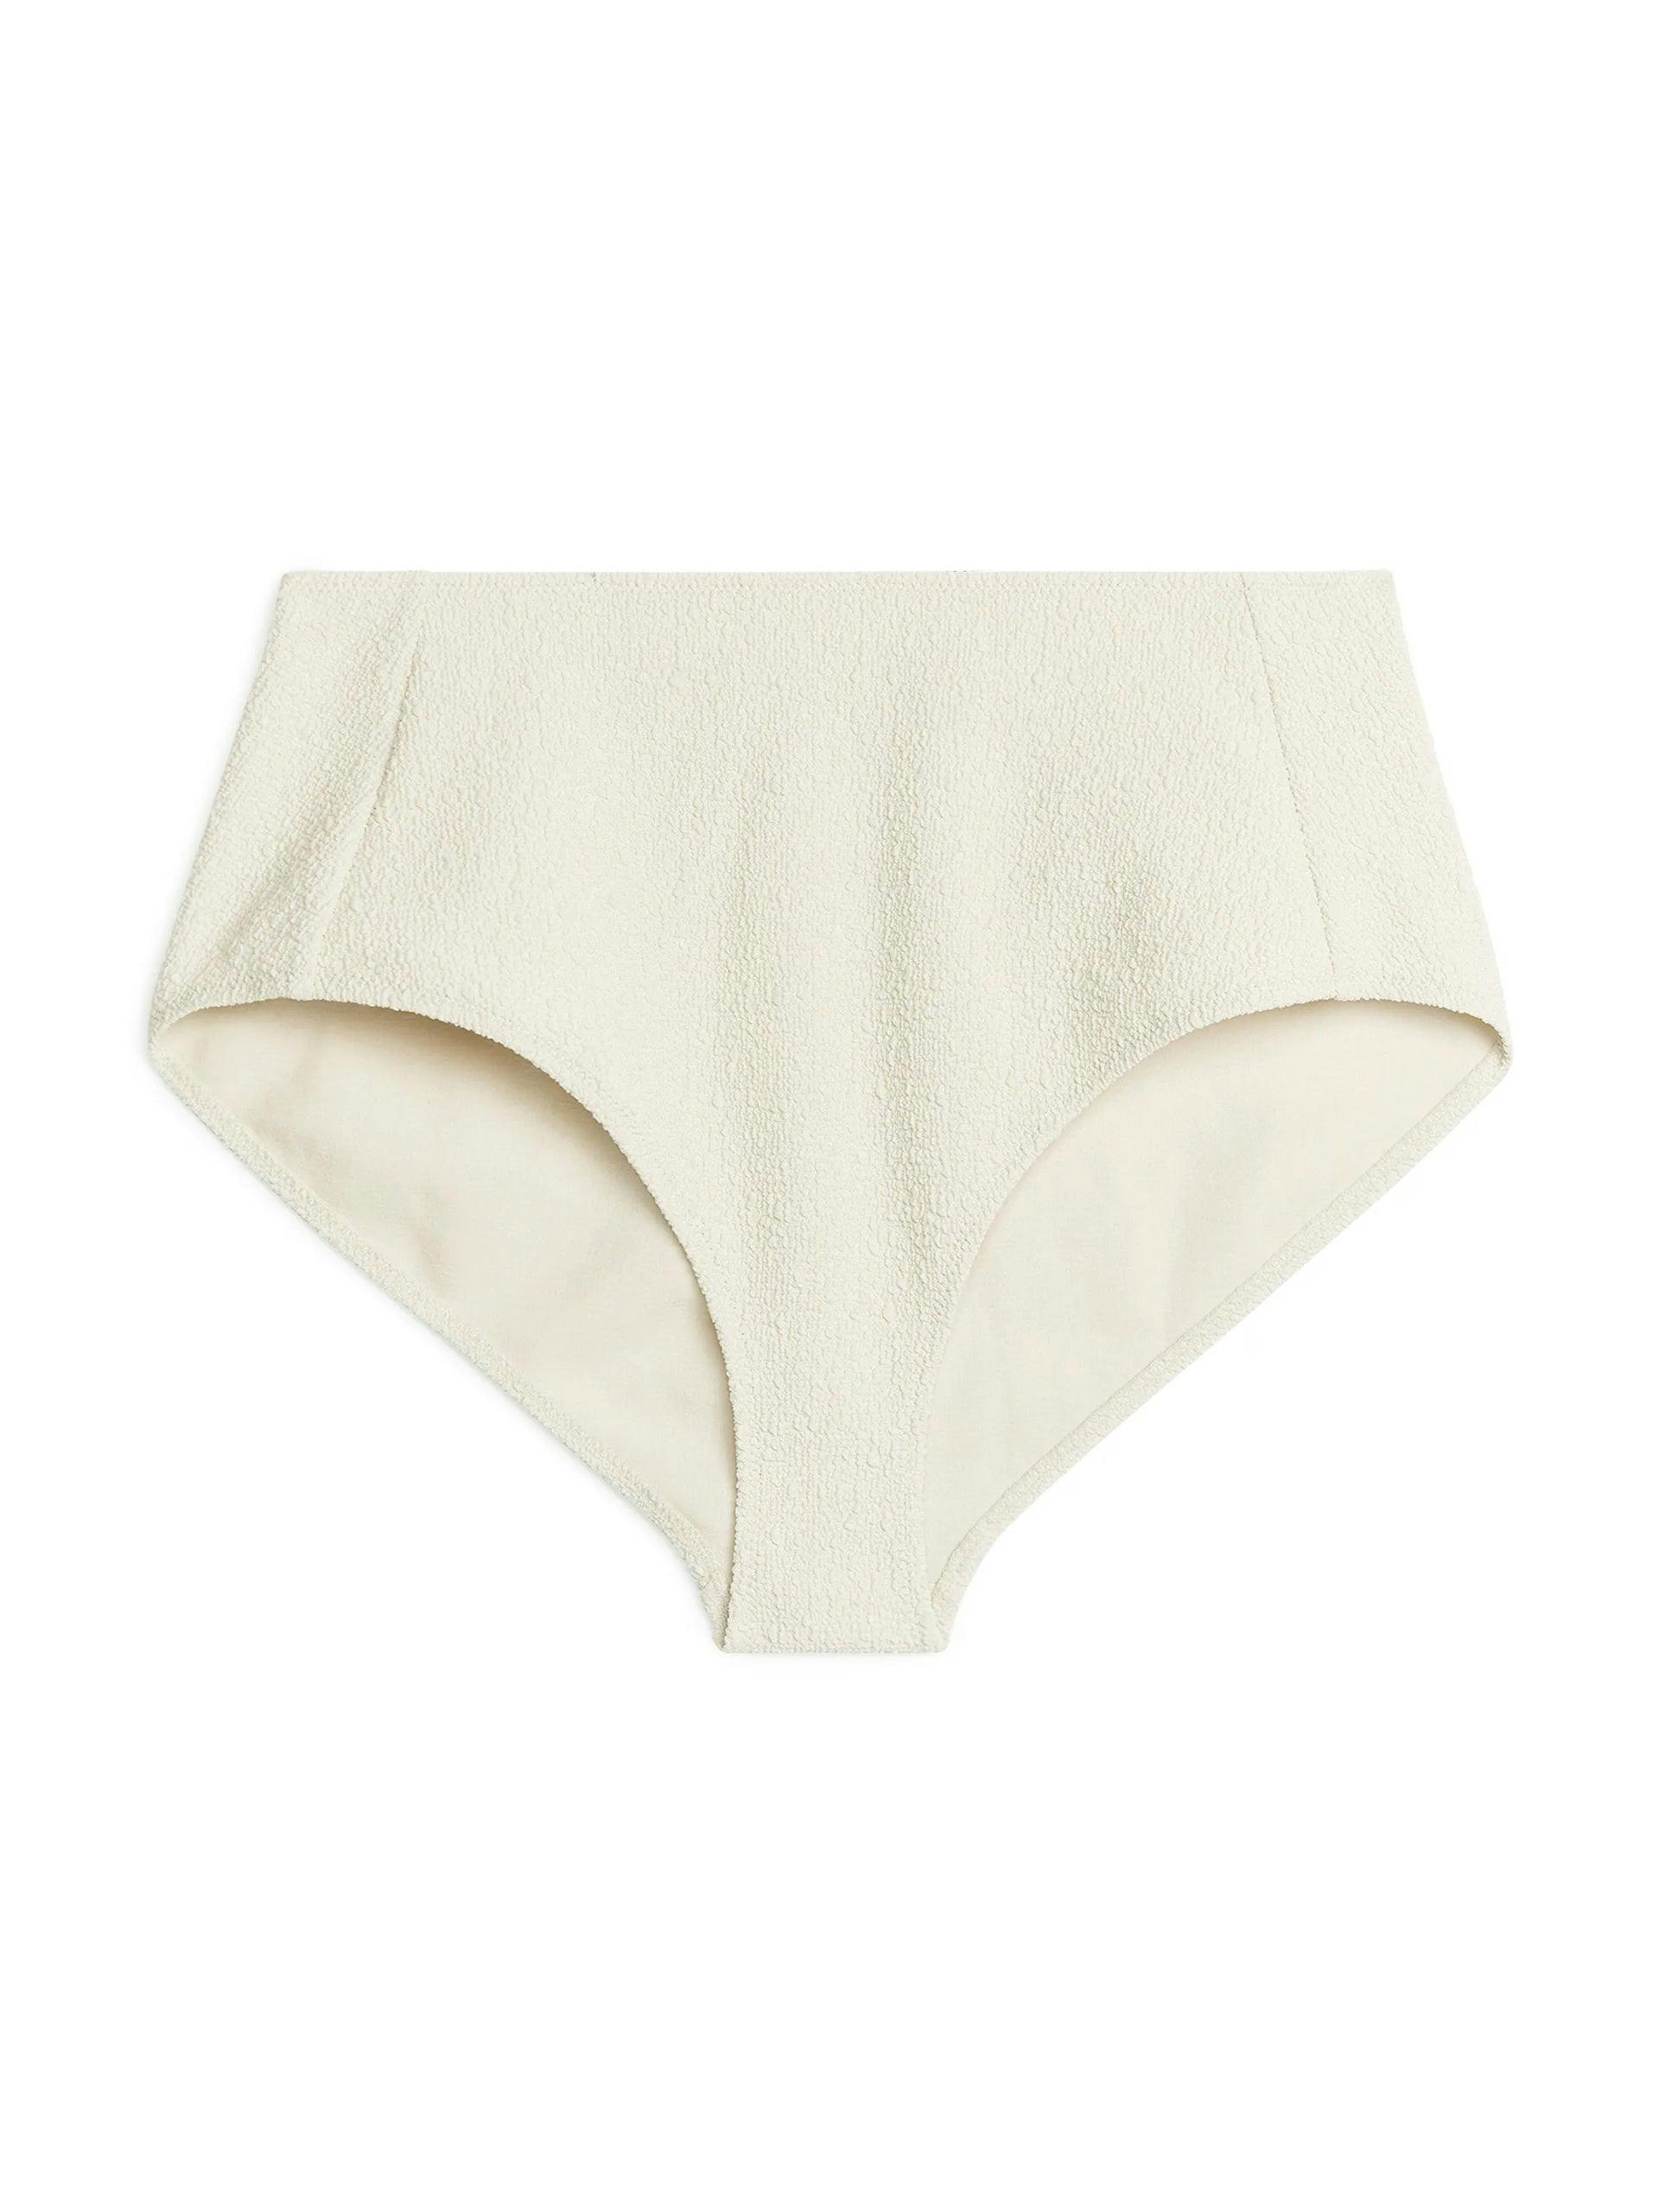 White high-waist textured bikini bottoms